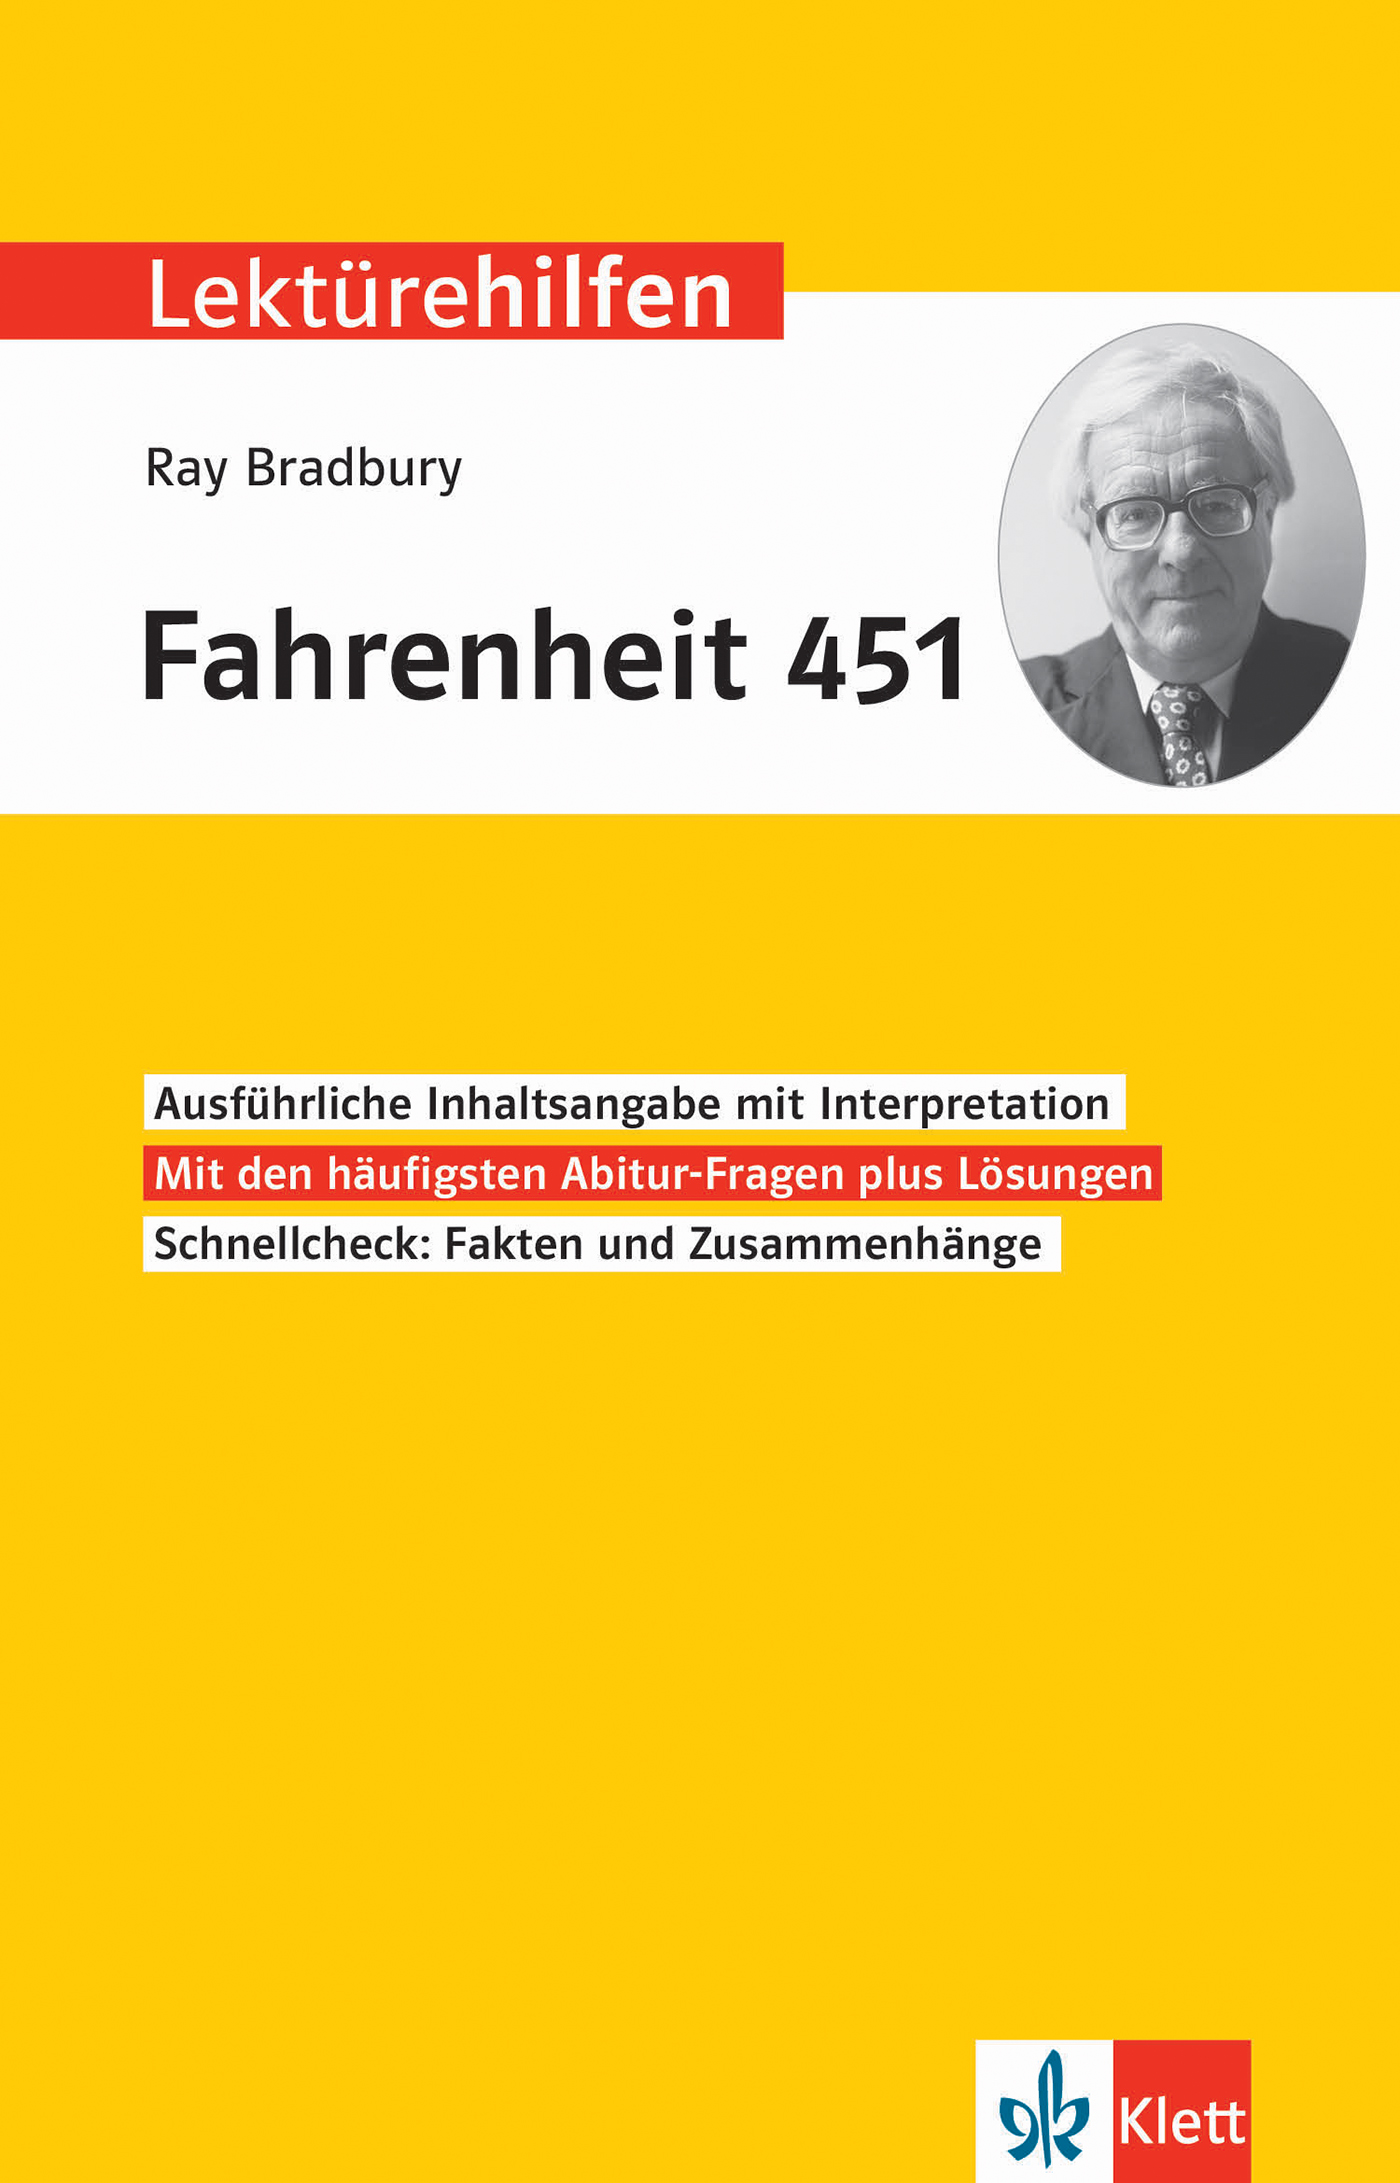 Klett Lektürehilfen Ray Bradbury, Fahrenheit 451